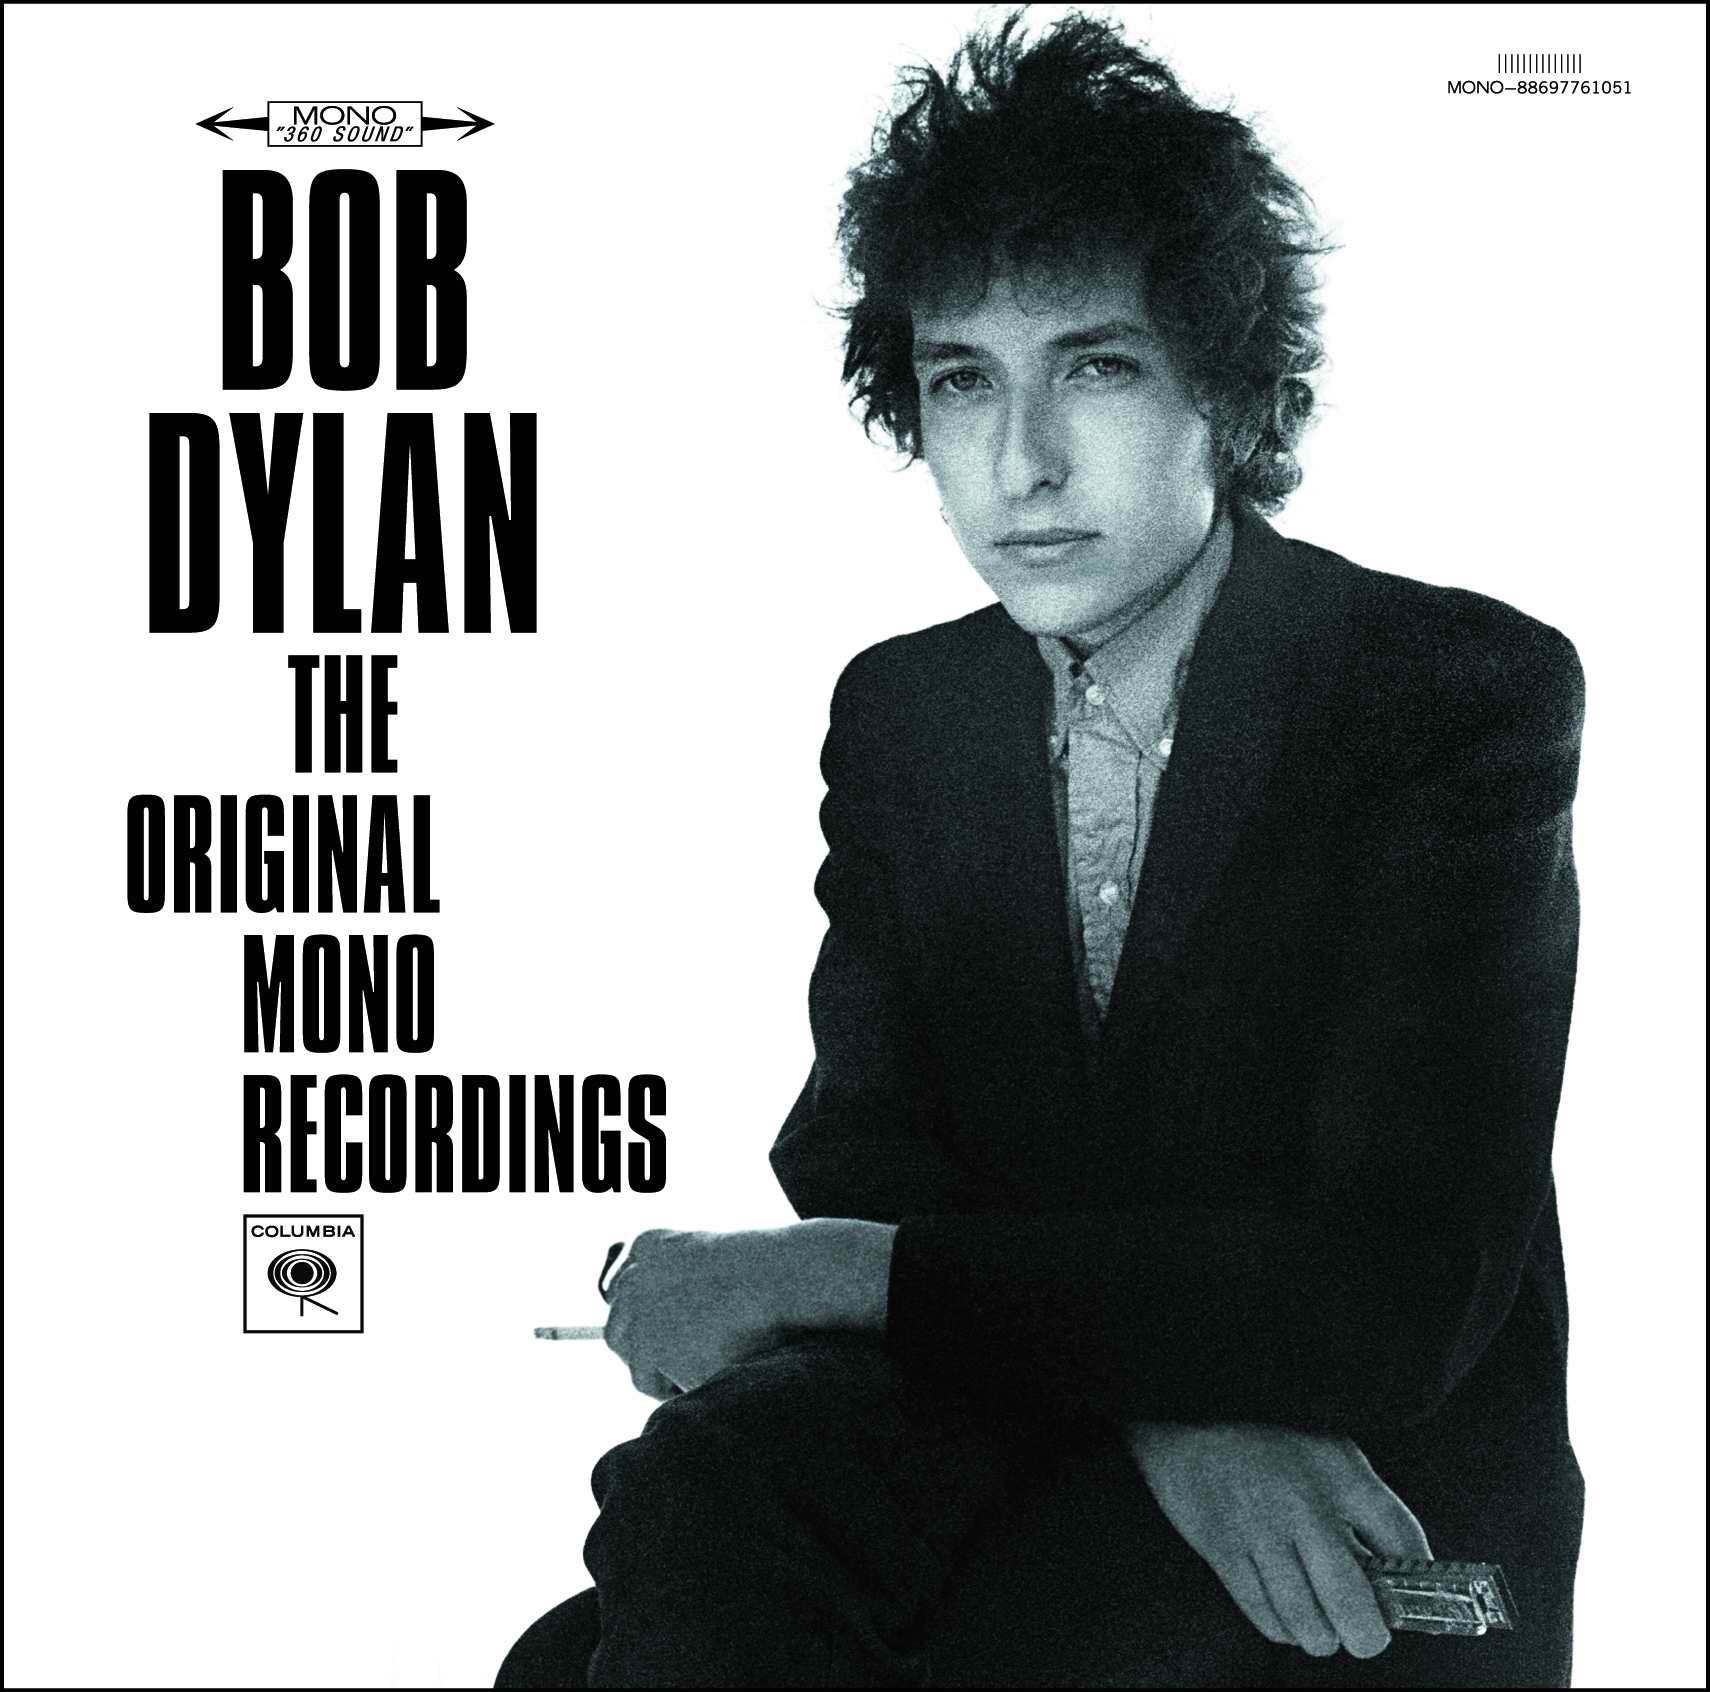 Bob Dylan - Like a Rolling Stone - YouTube